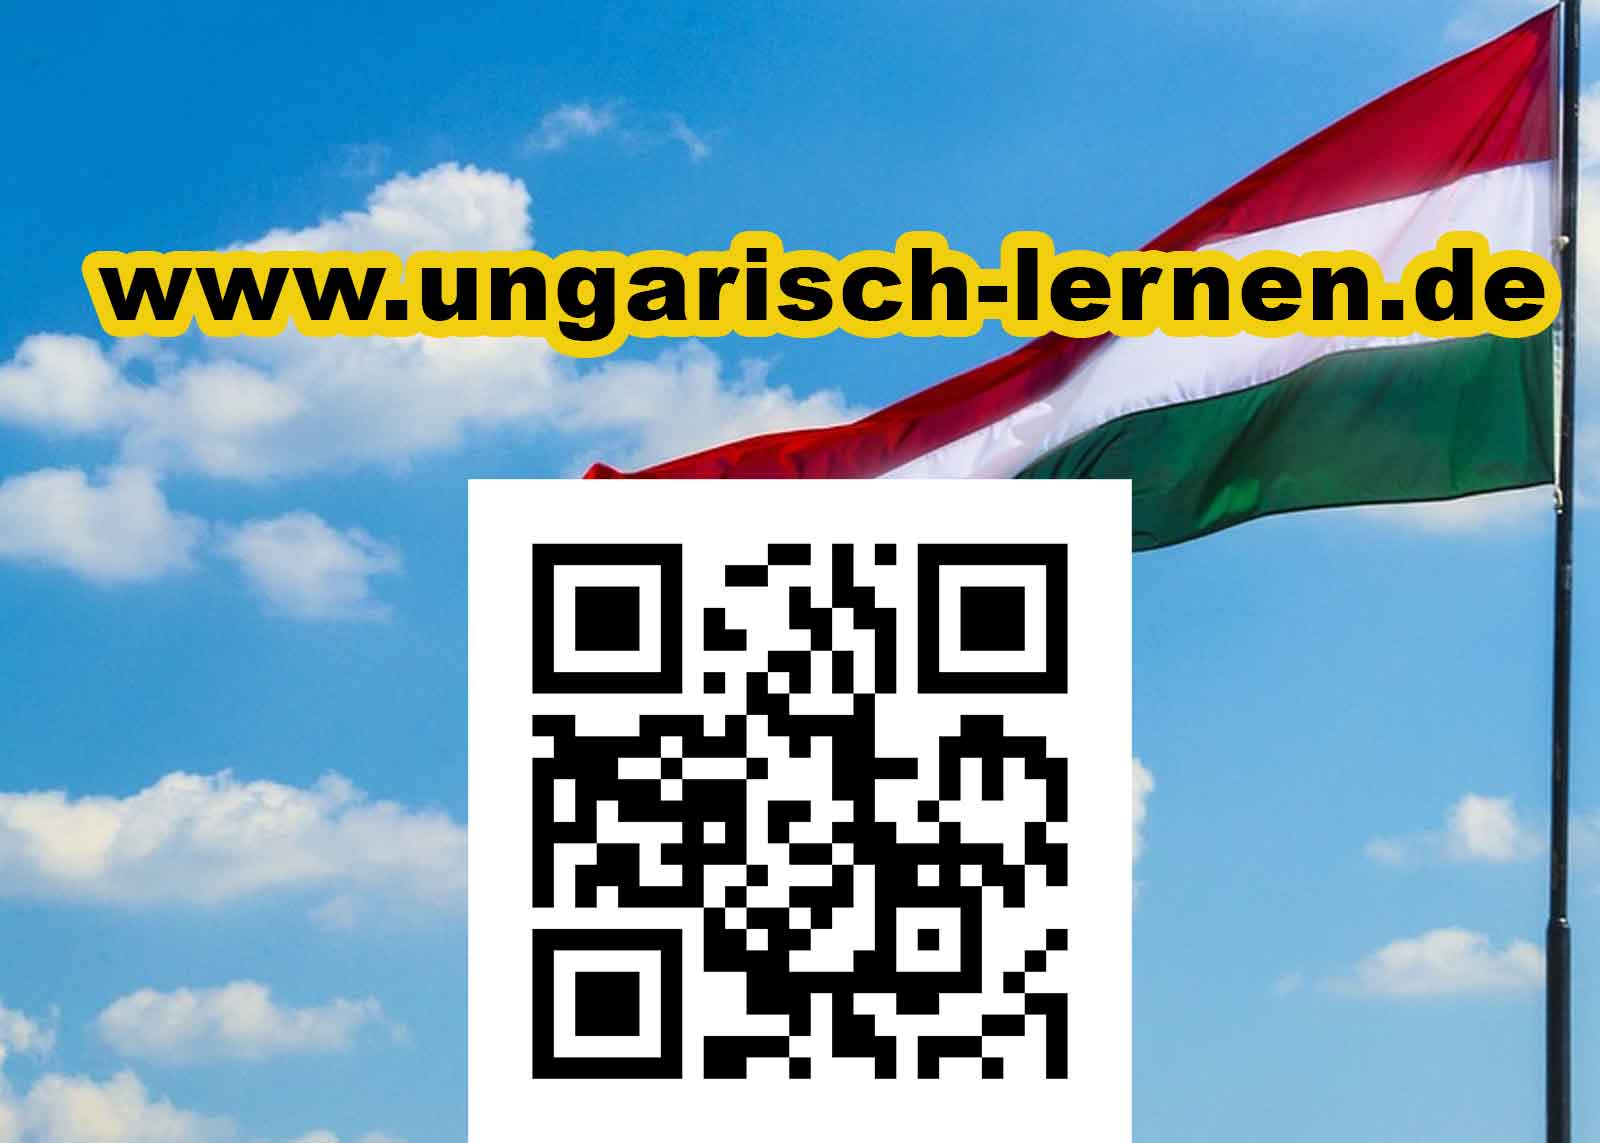 Ungarisch lernen www.ungarisch-lernen.de